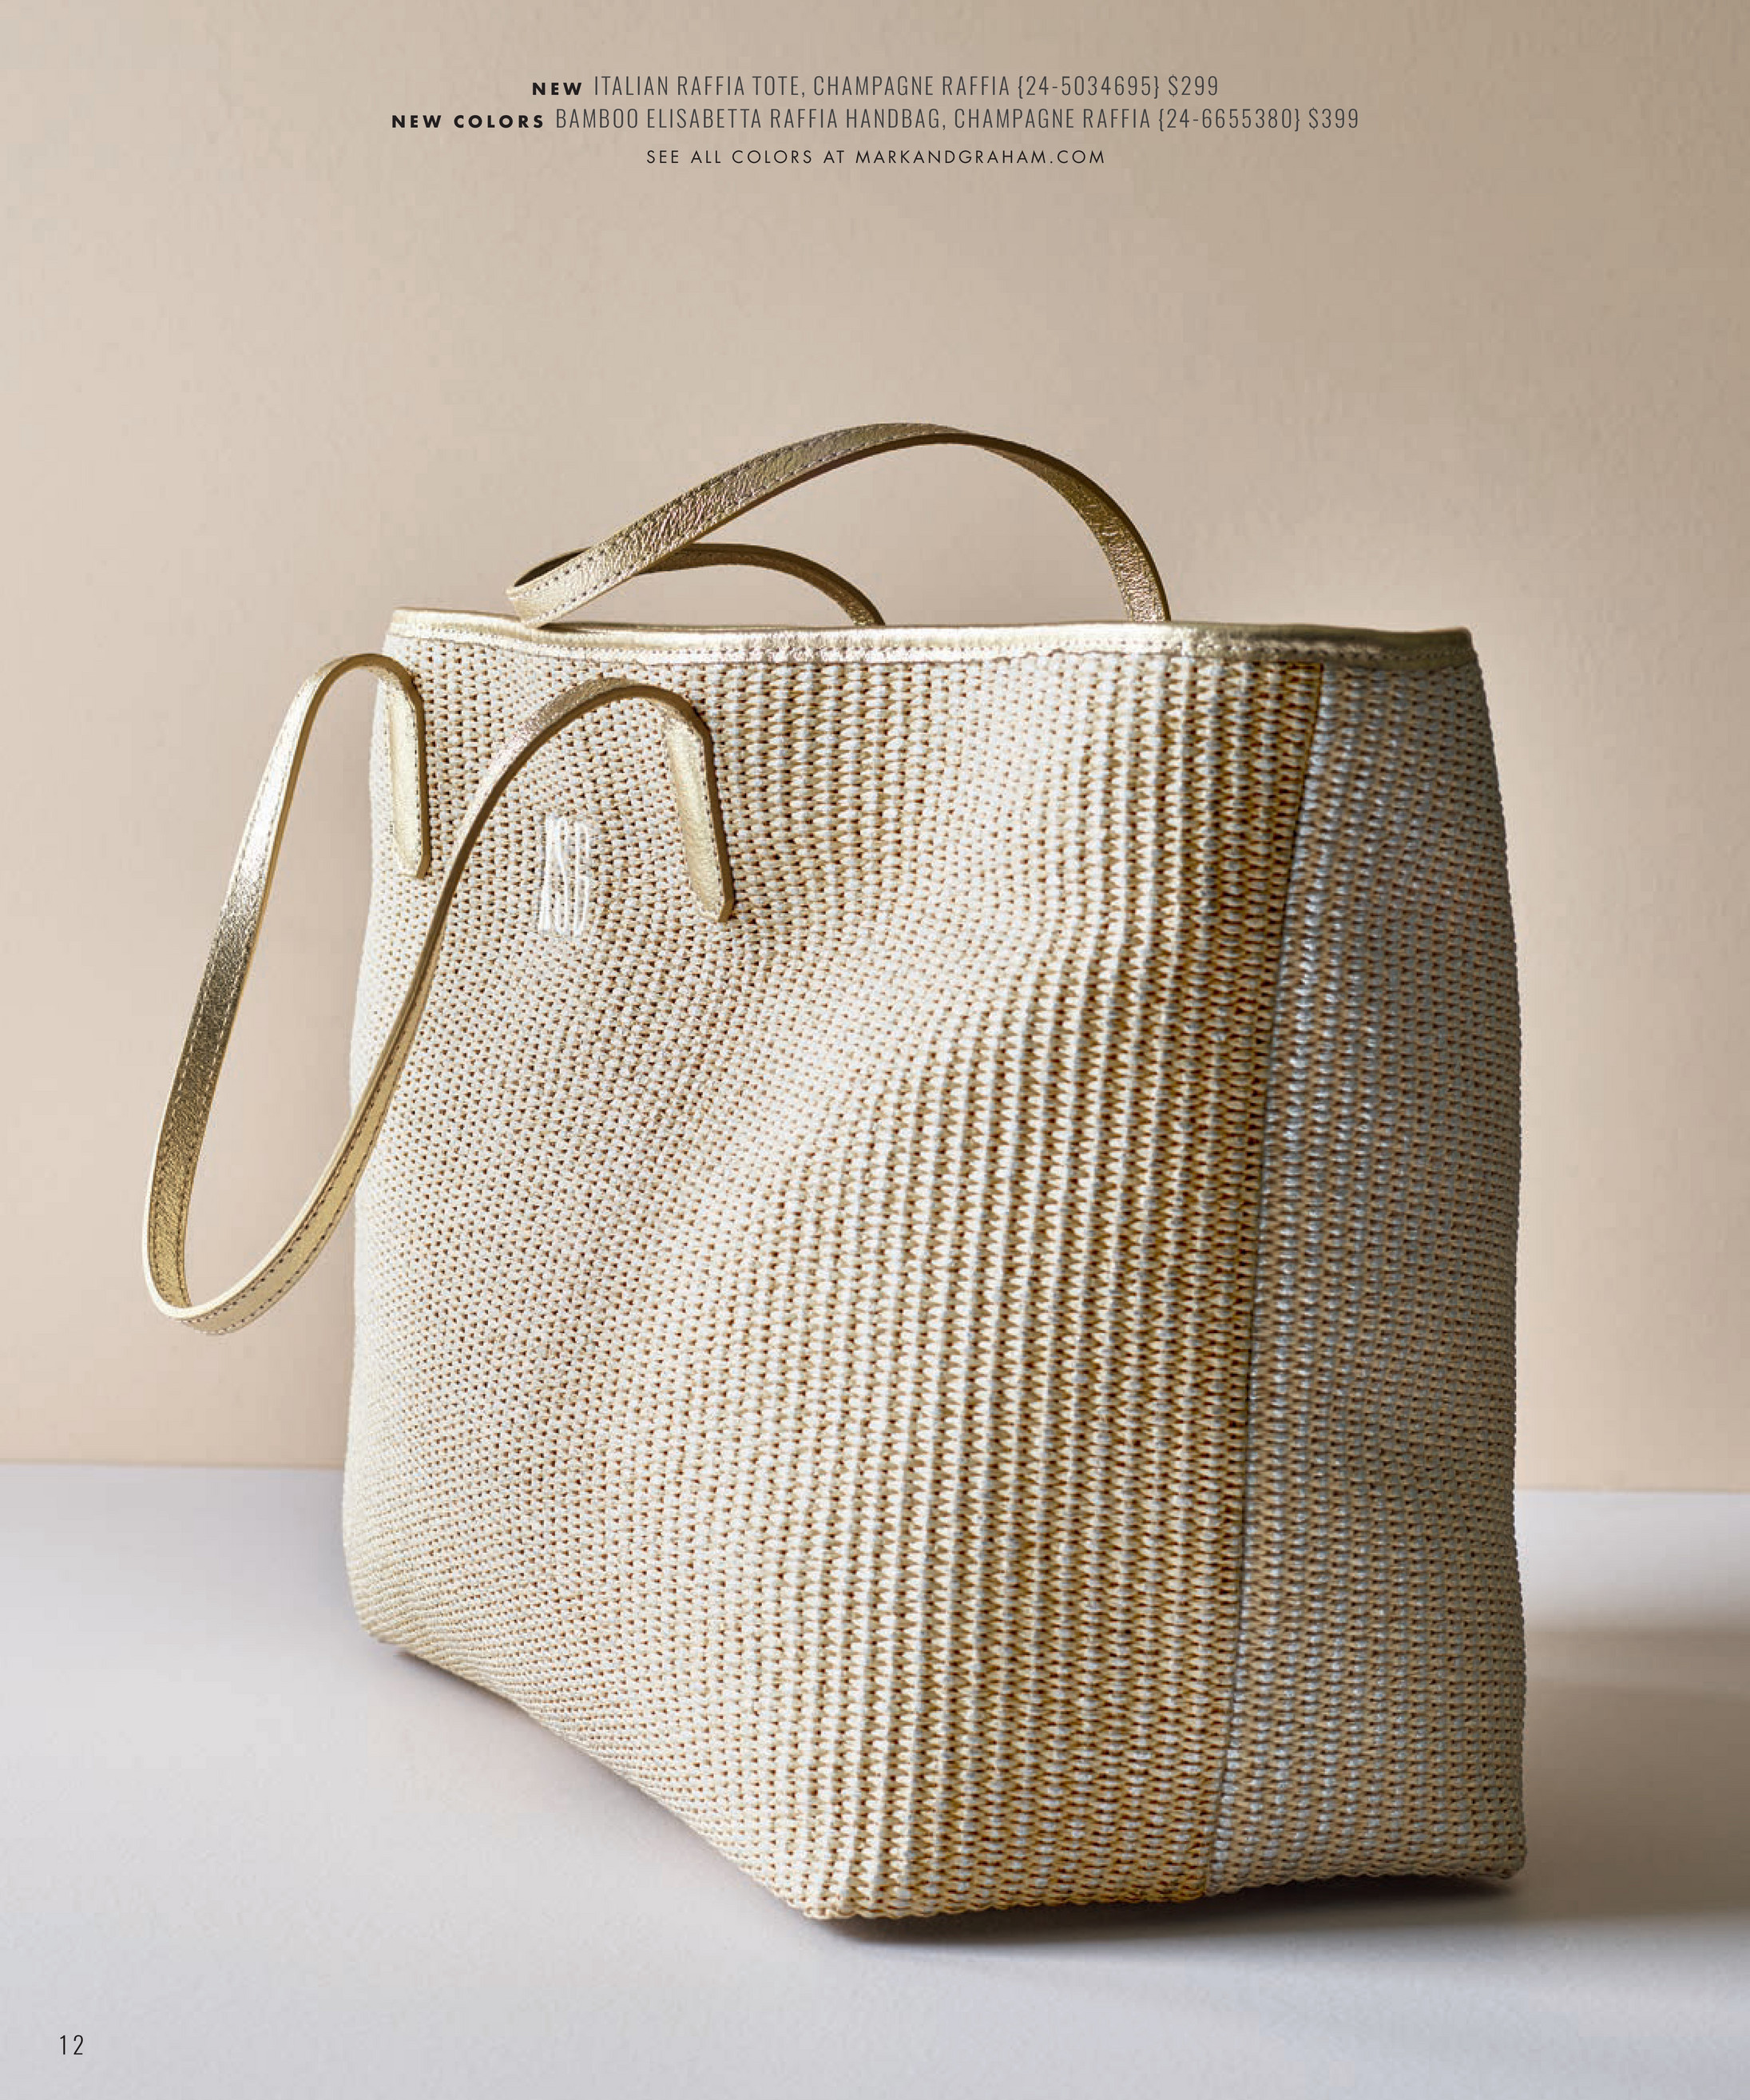 Totes bags Elisabetta Franchi - Medium tote bag with fringes